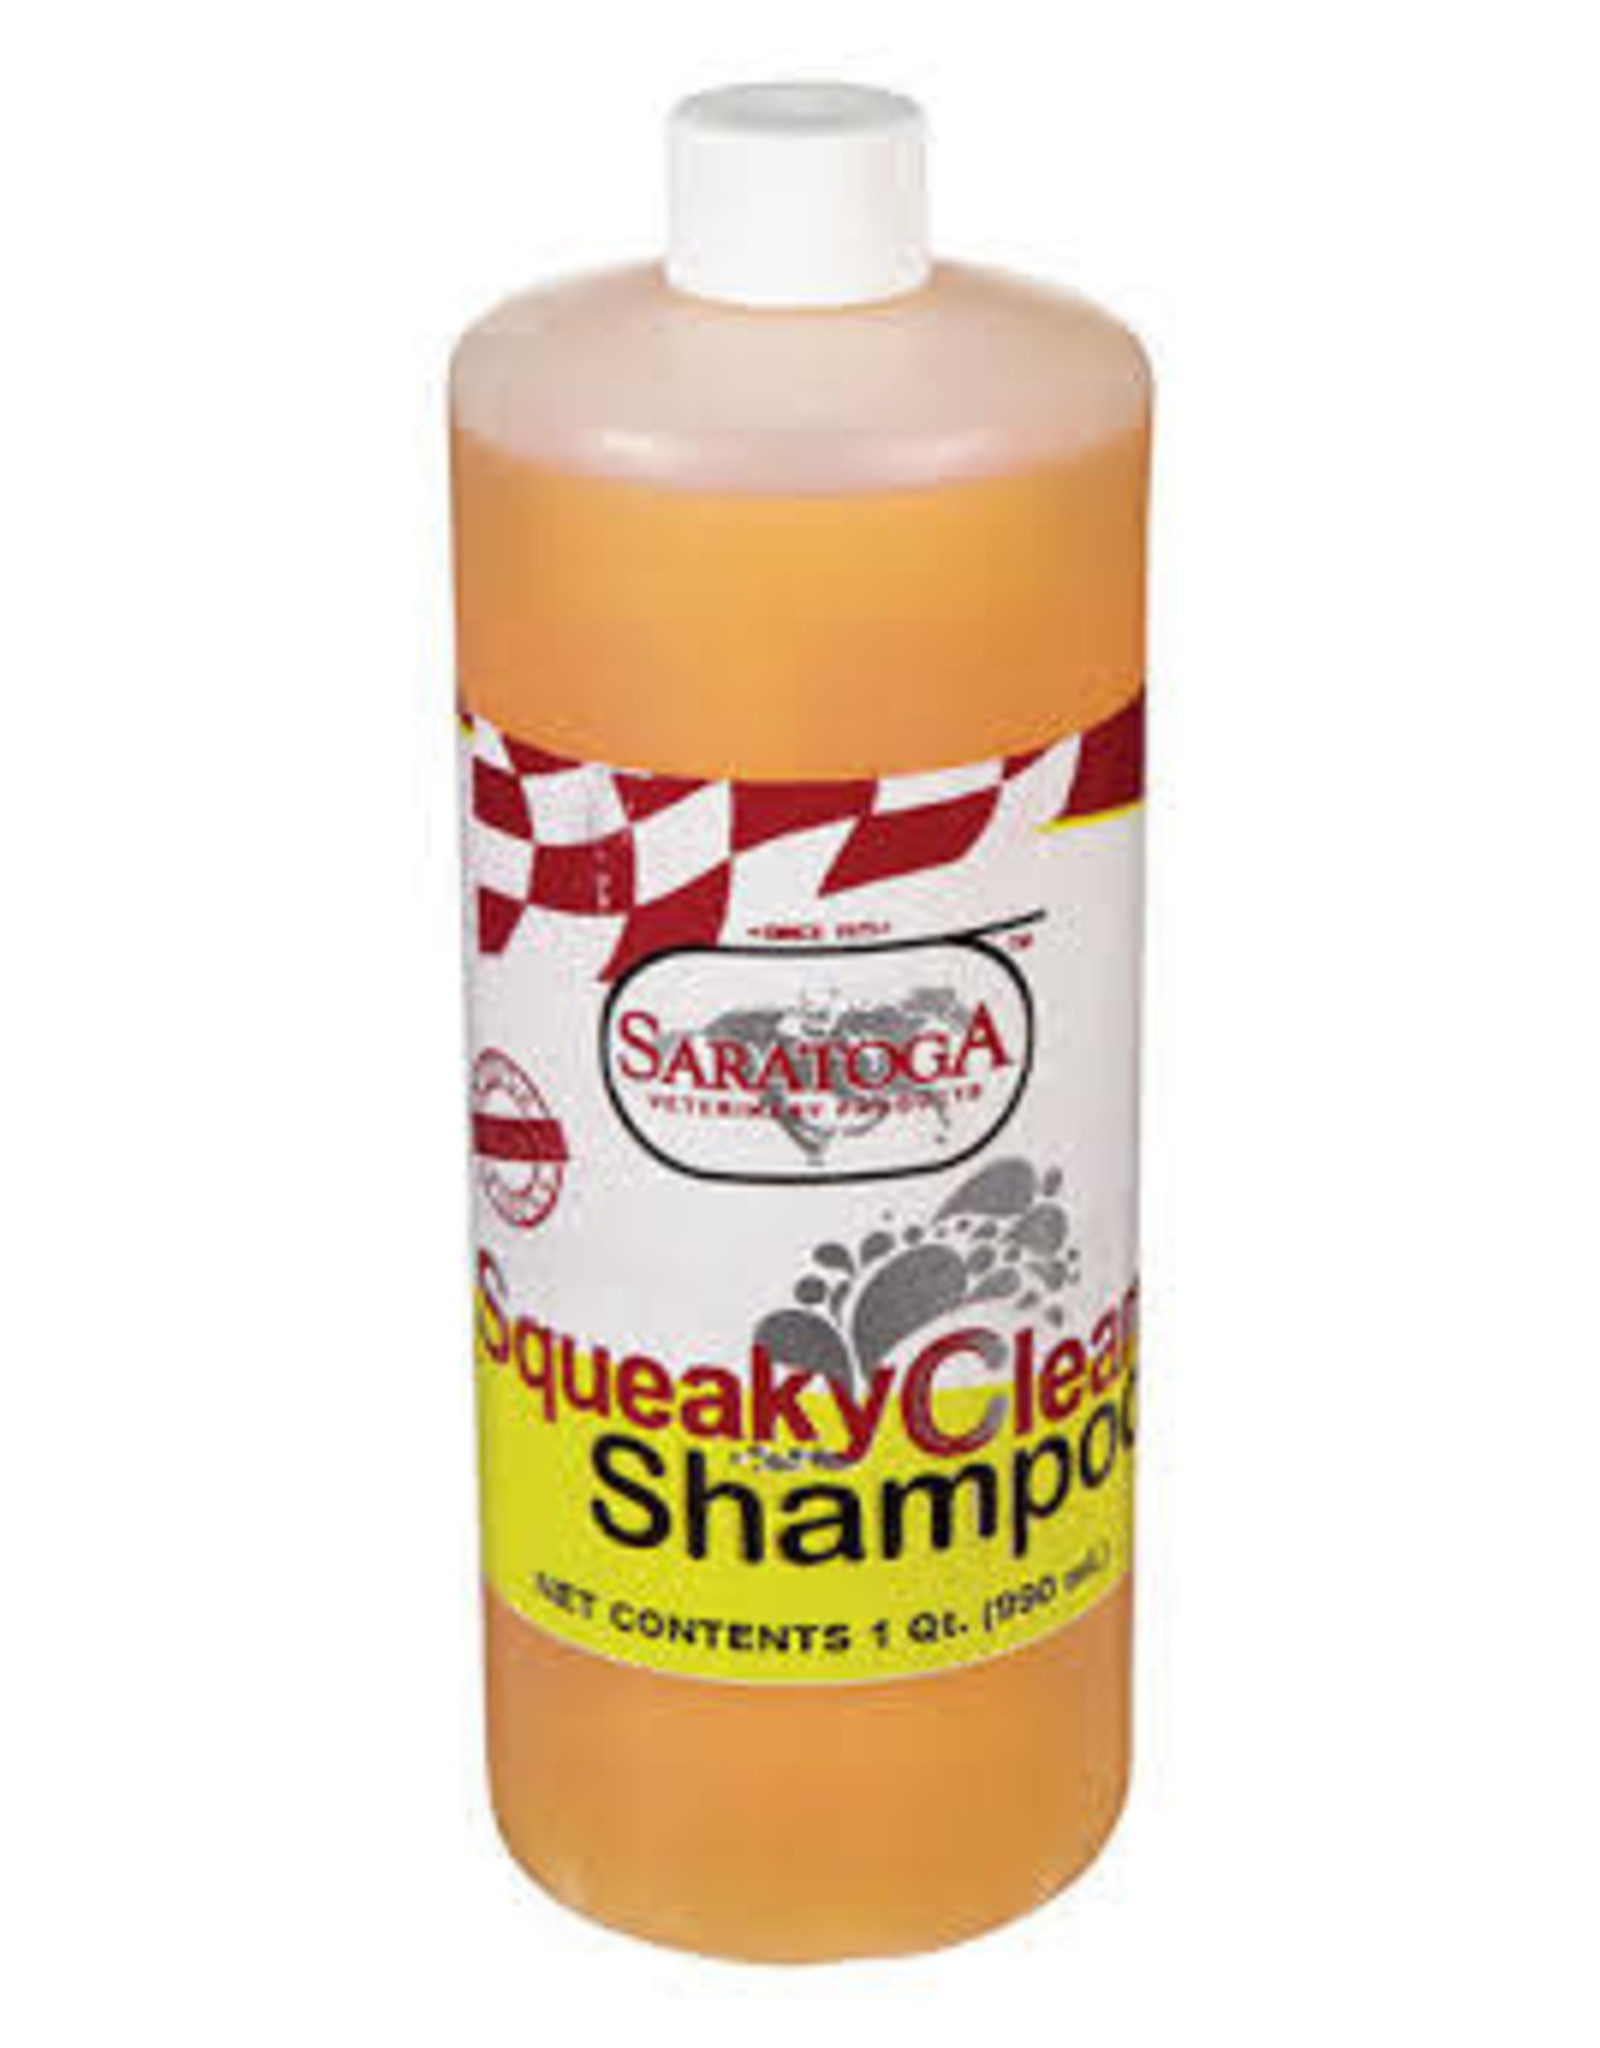 Saratoga Squeaky Clean Shampoo Qt